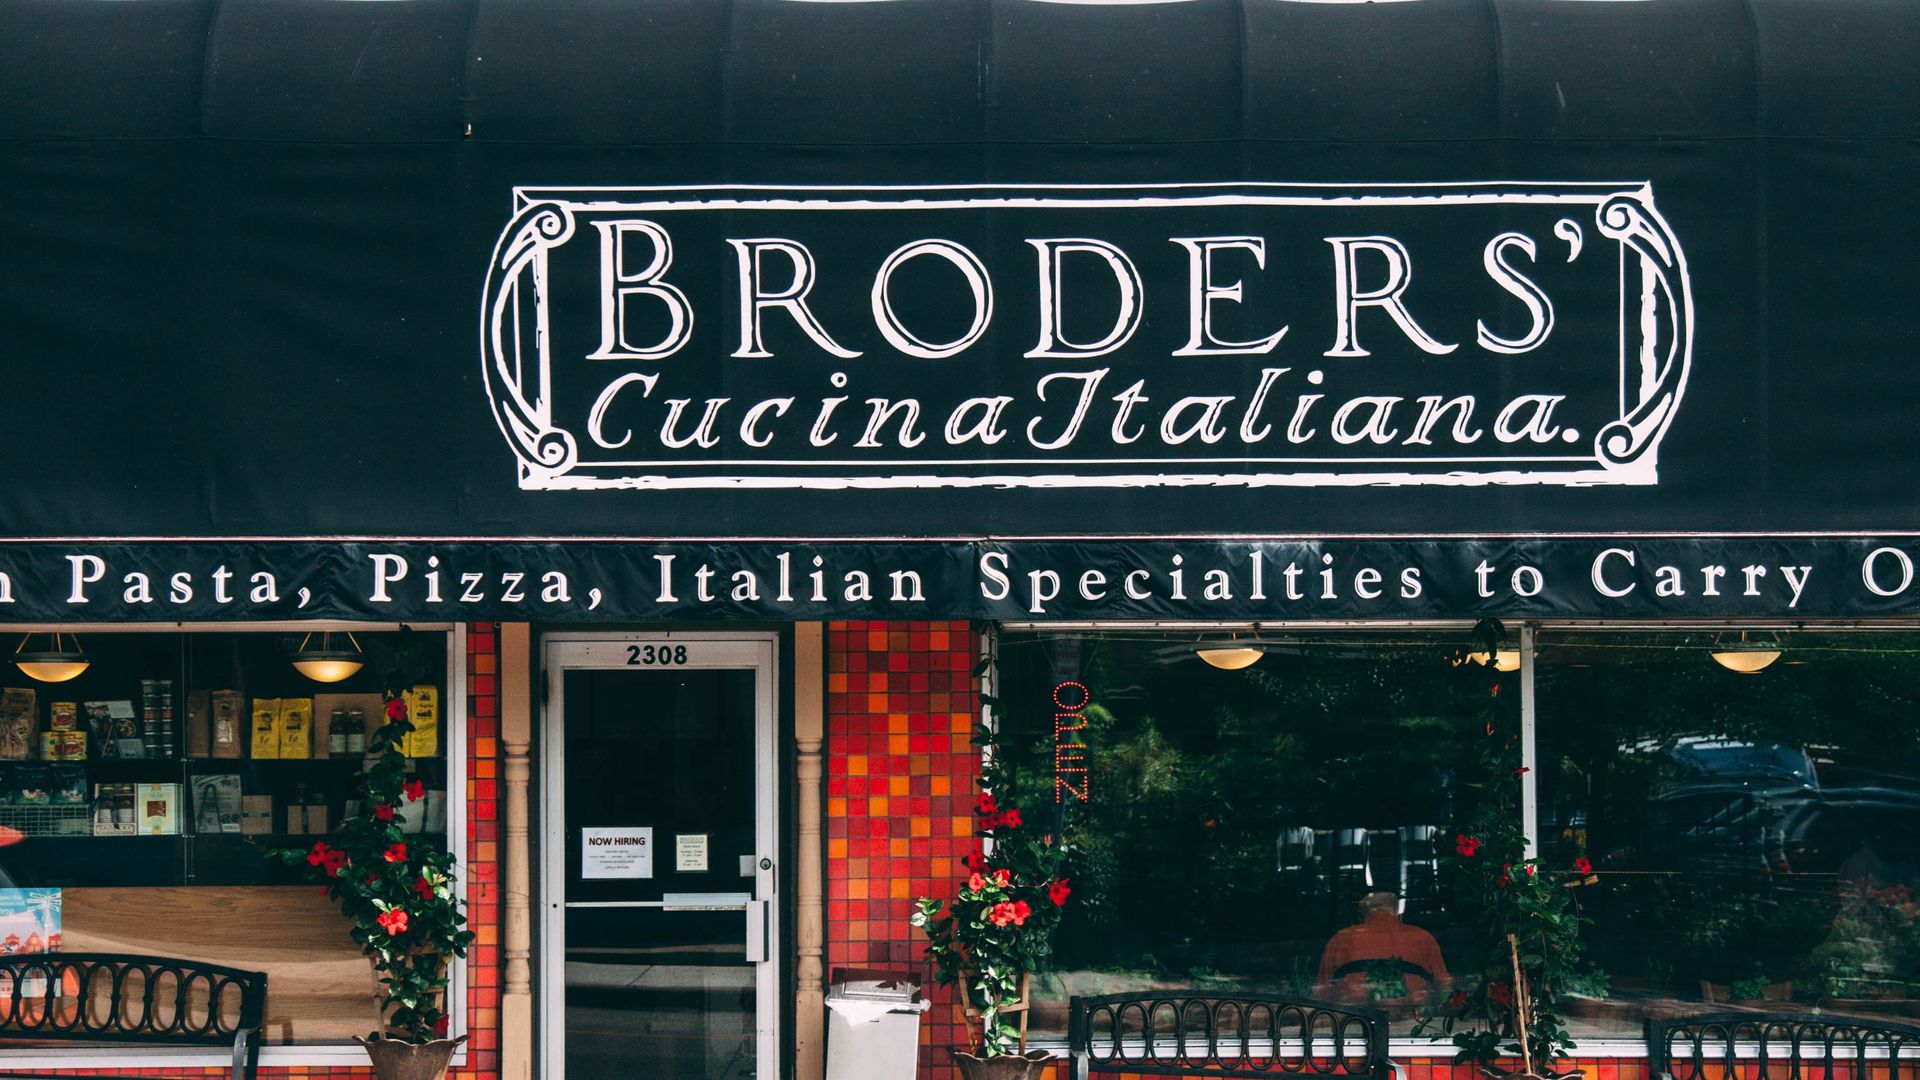 The exterior of Broders Cucina Italiana.